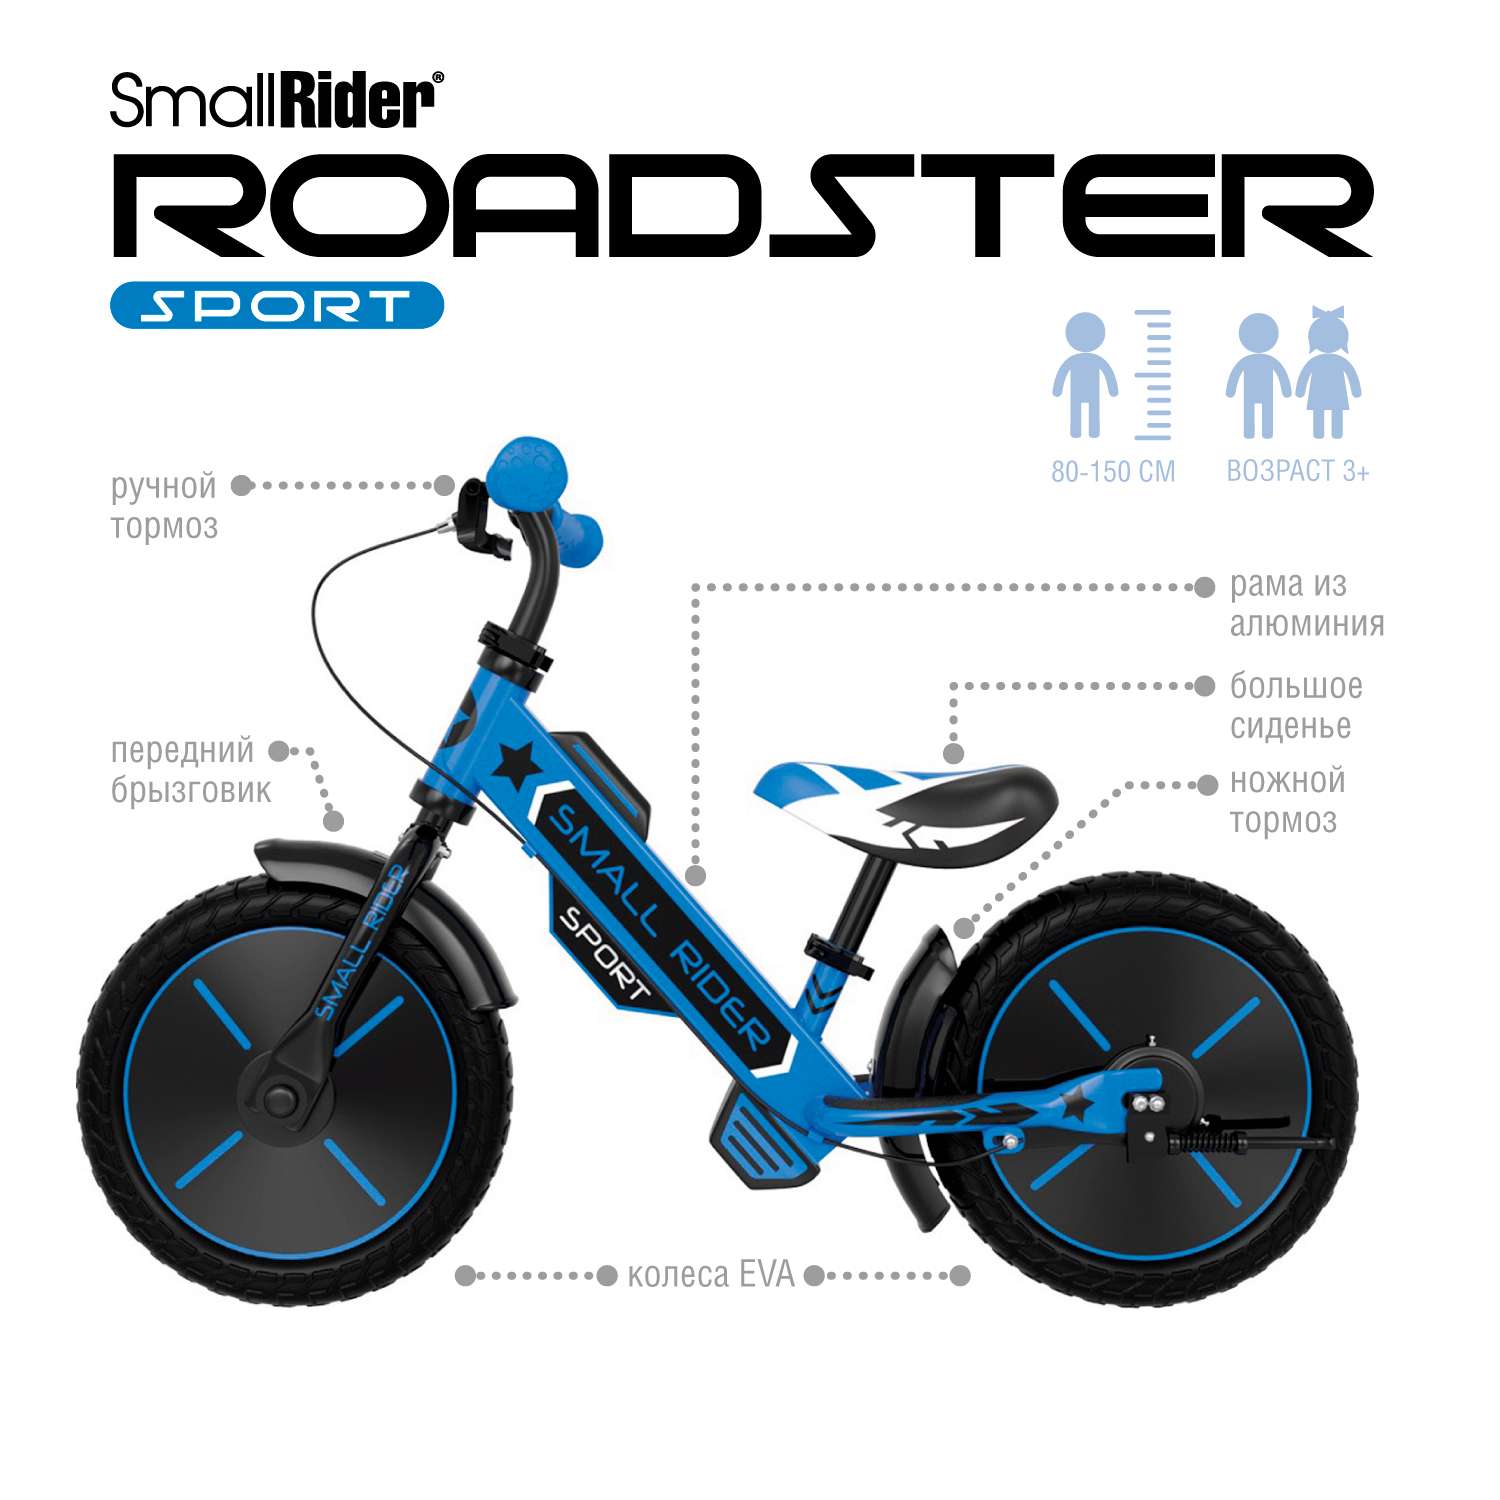 Беговел Small Rider Roadster Sport Eva синий - фото 2